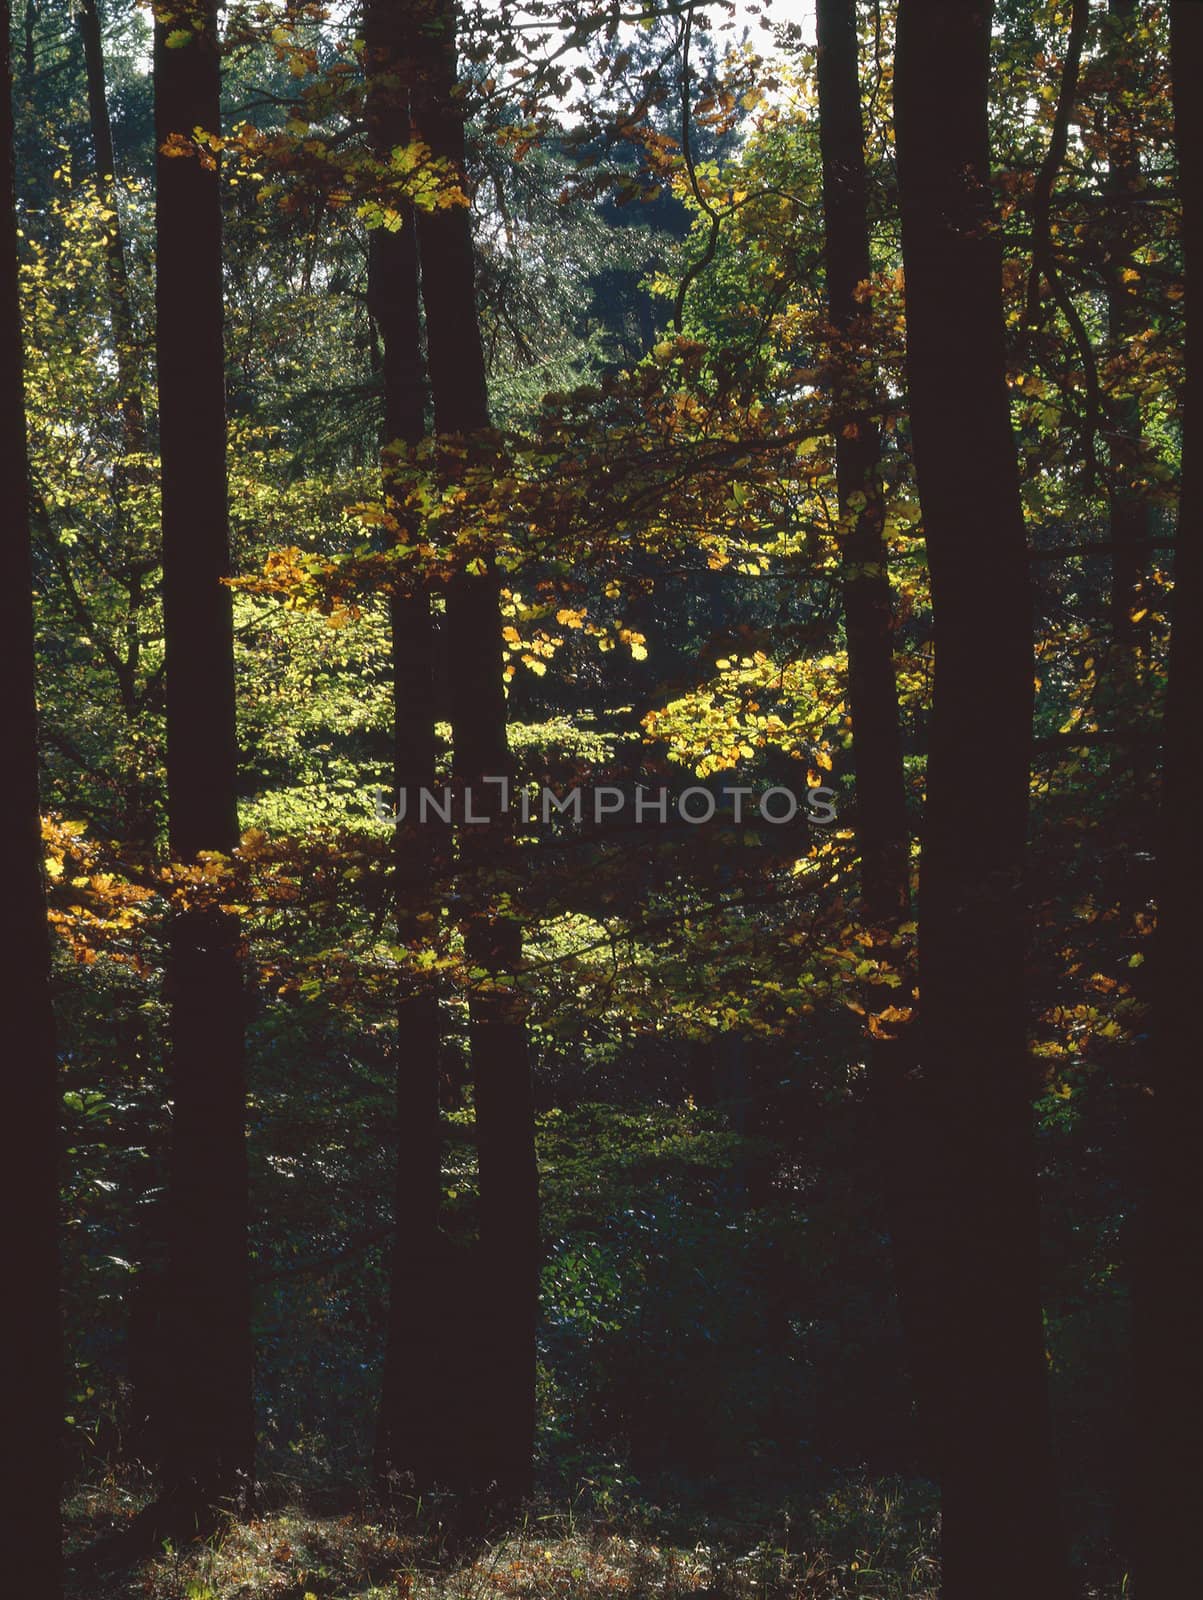 Autumn Forest by jol66